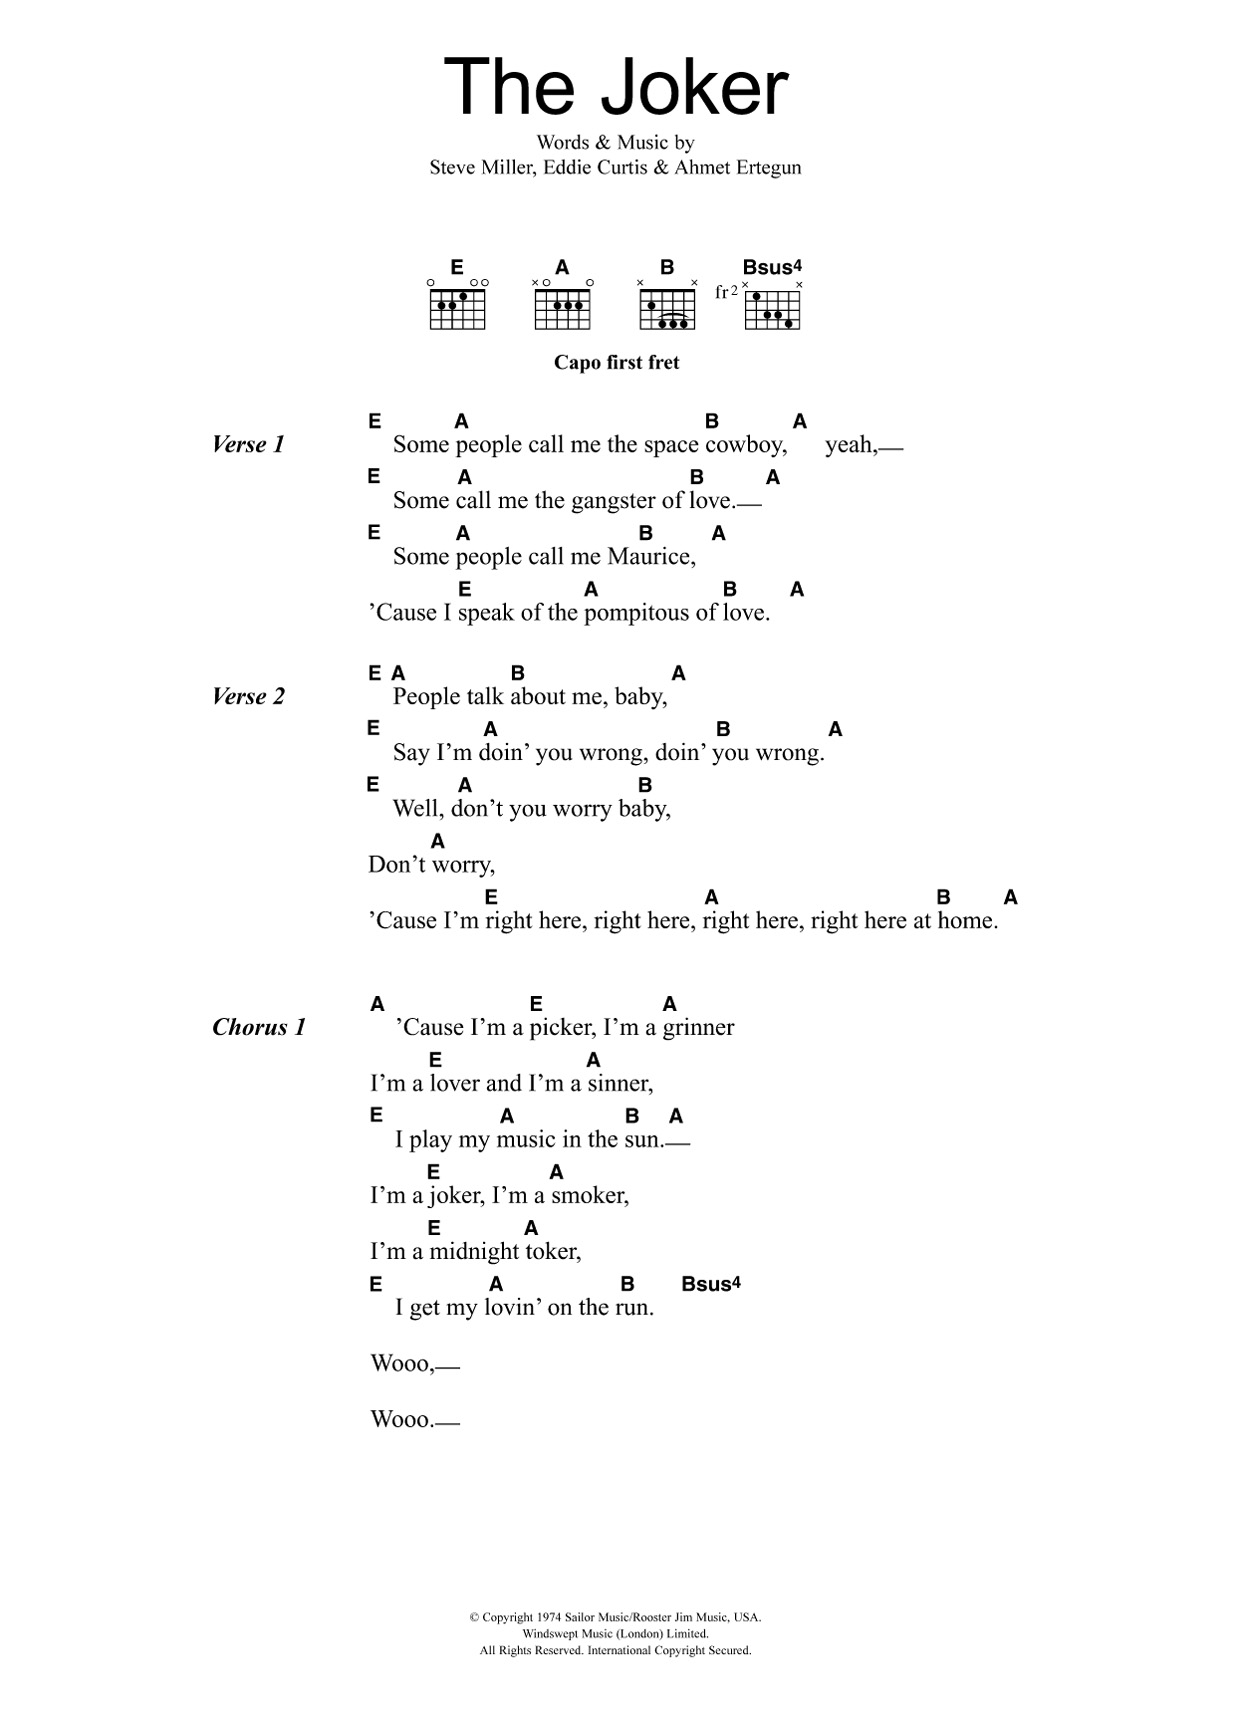 The Steve Miller Band The Joker Sheet Music Notes & Chords for Lyrics & Chords - Download or Print PDF